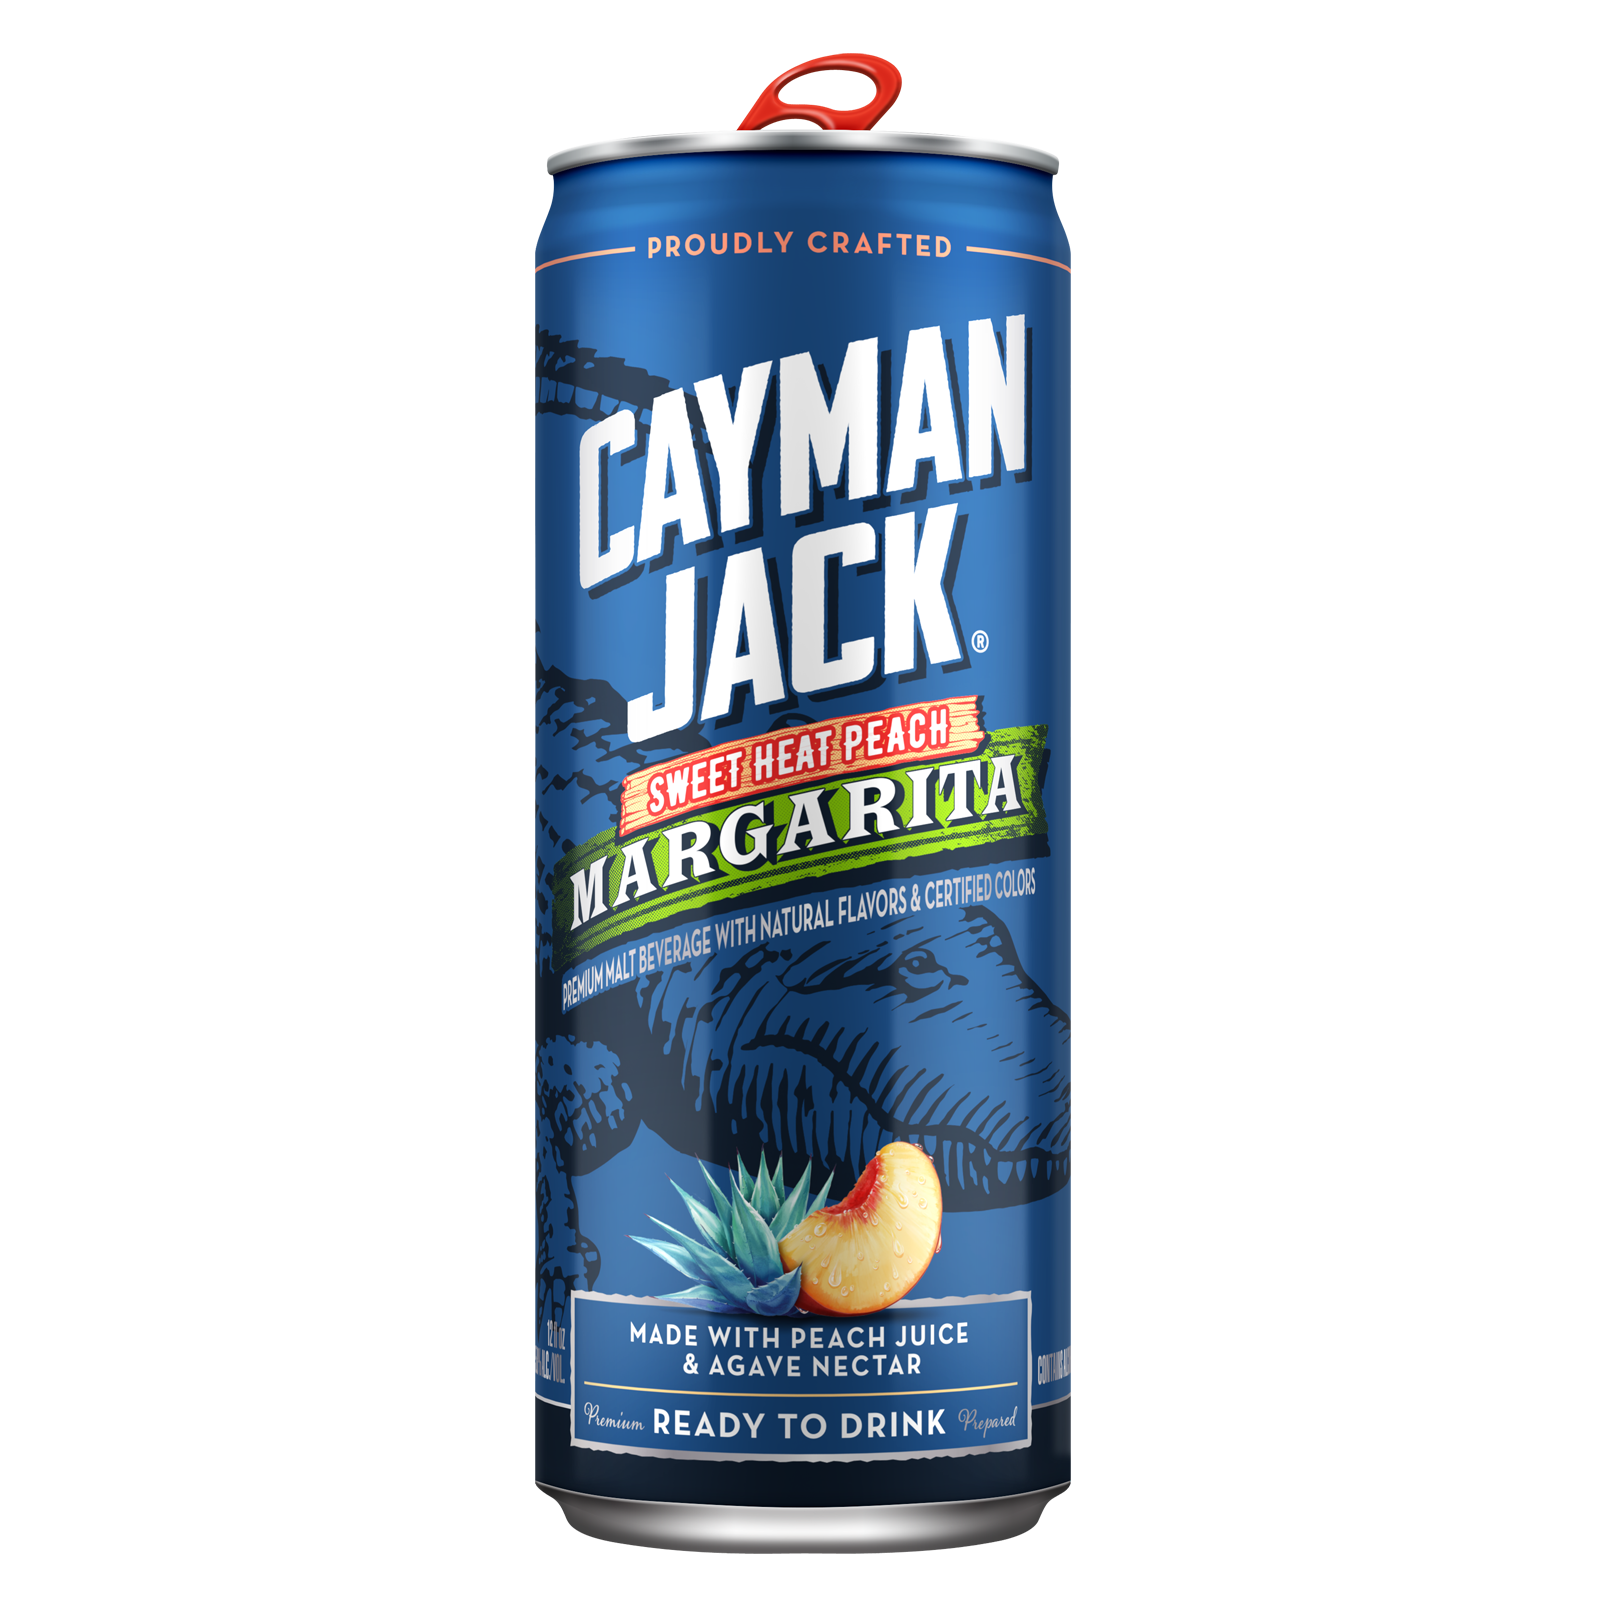 Cayman Jack Sweet Heat Peach Single 12oz Can 5.8% ABV